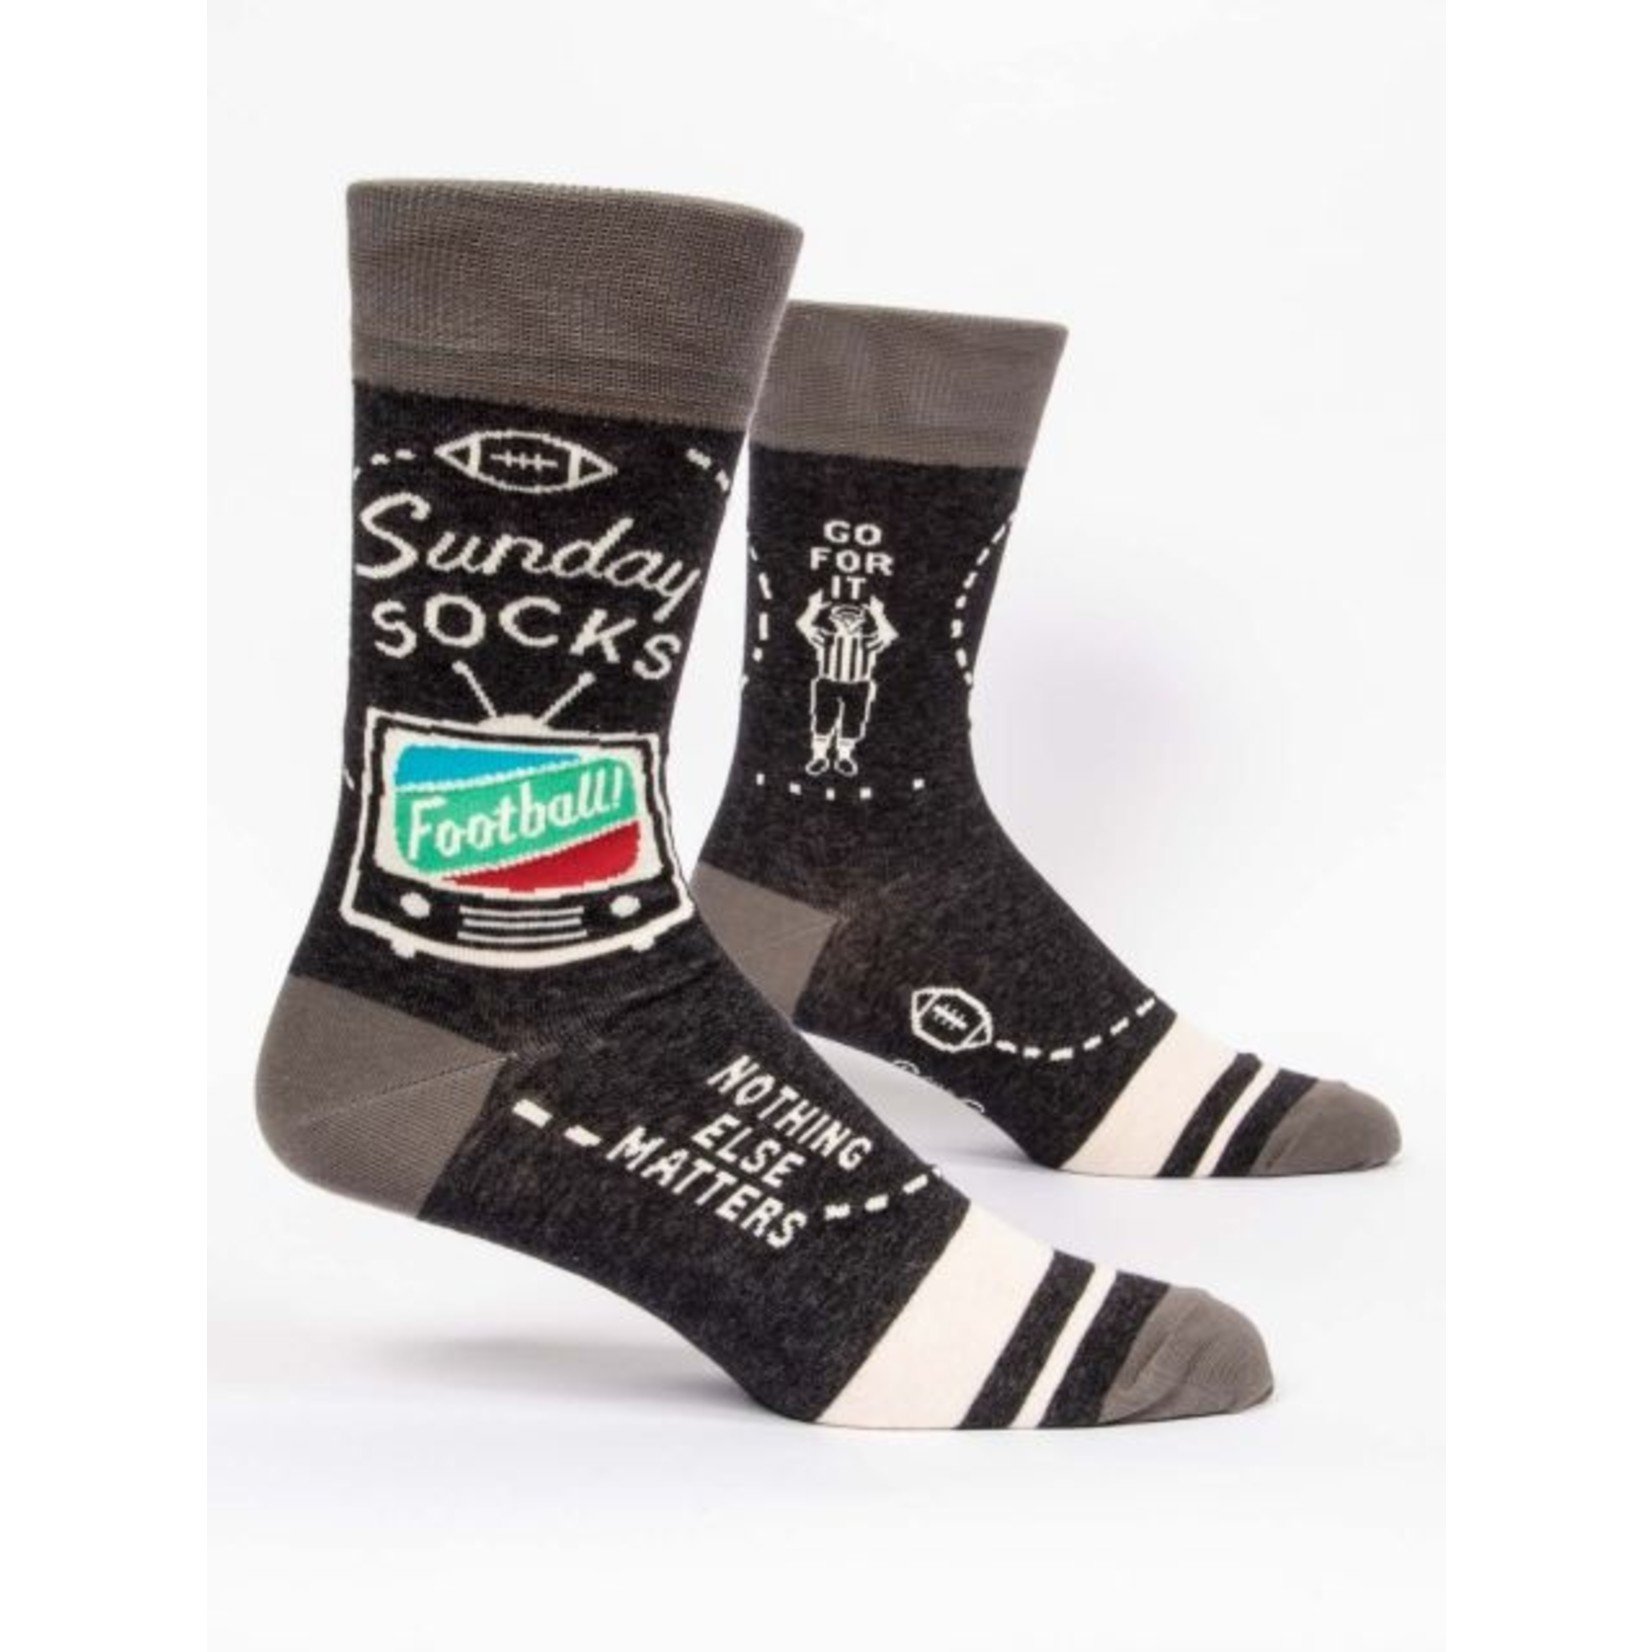 Socks (Mens)  - Sunday Socks